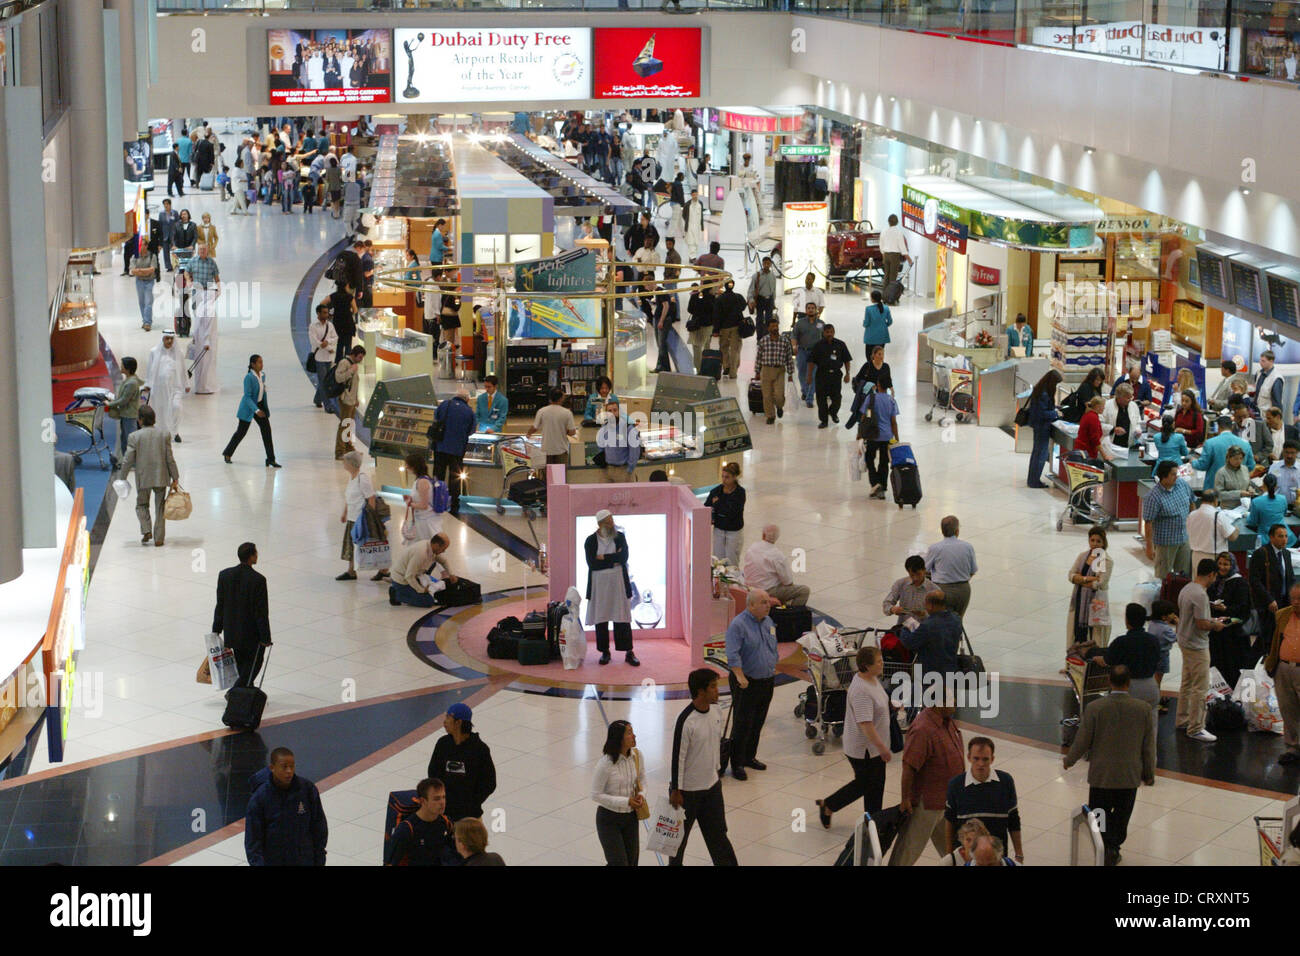 The Dubai Duty Free at Dubai airport Stock Photo